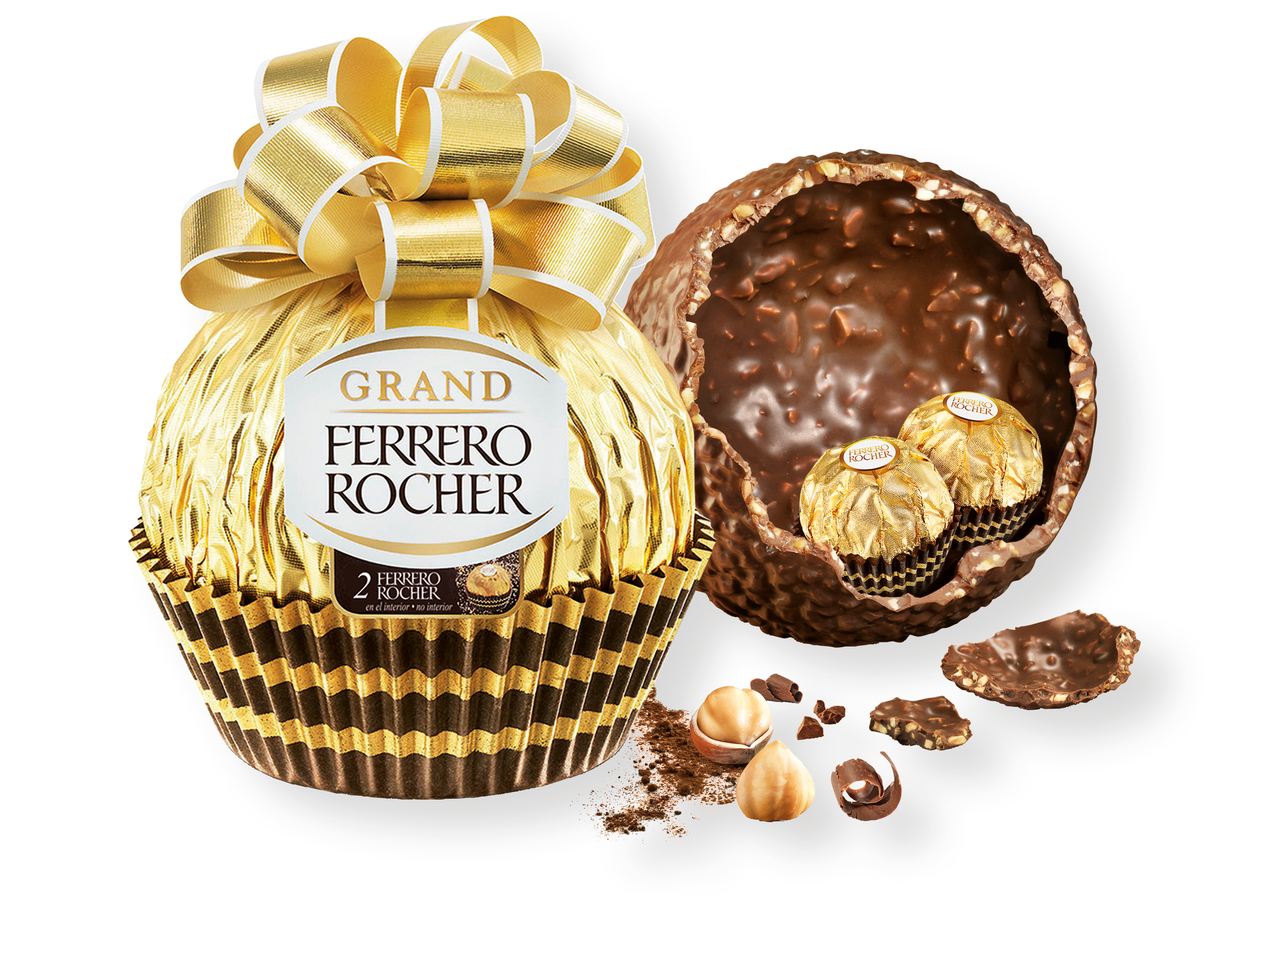 "Ferrero" Grand Ferrero Rocher